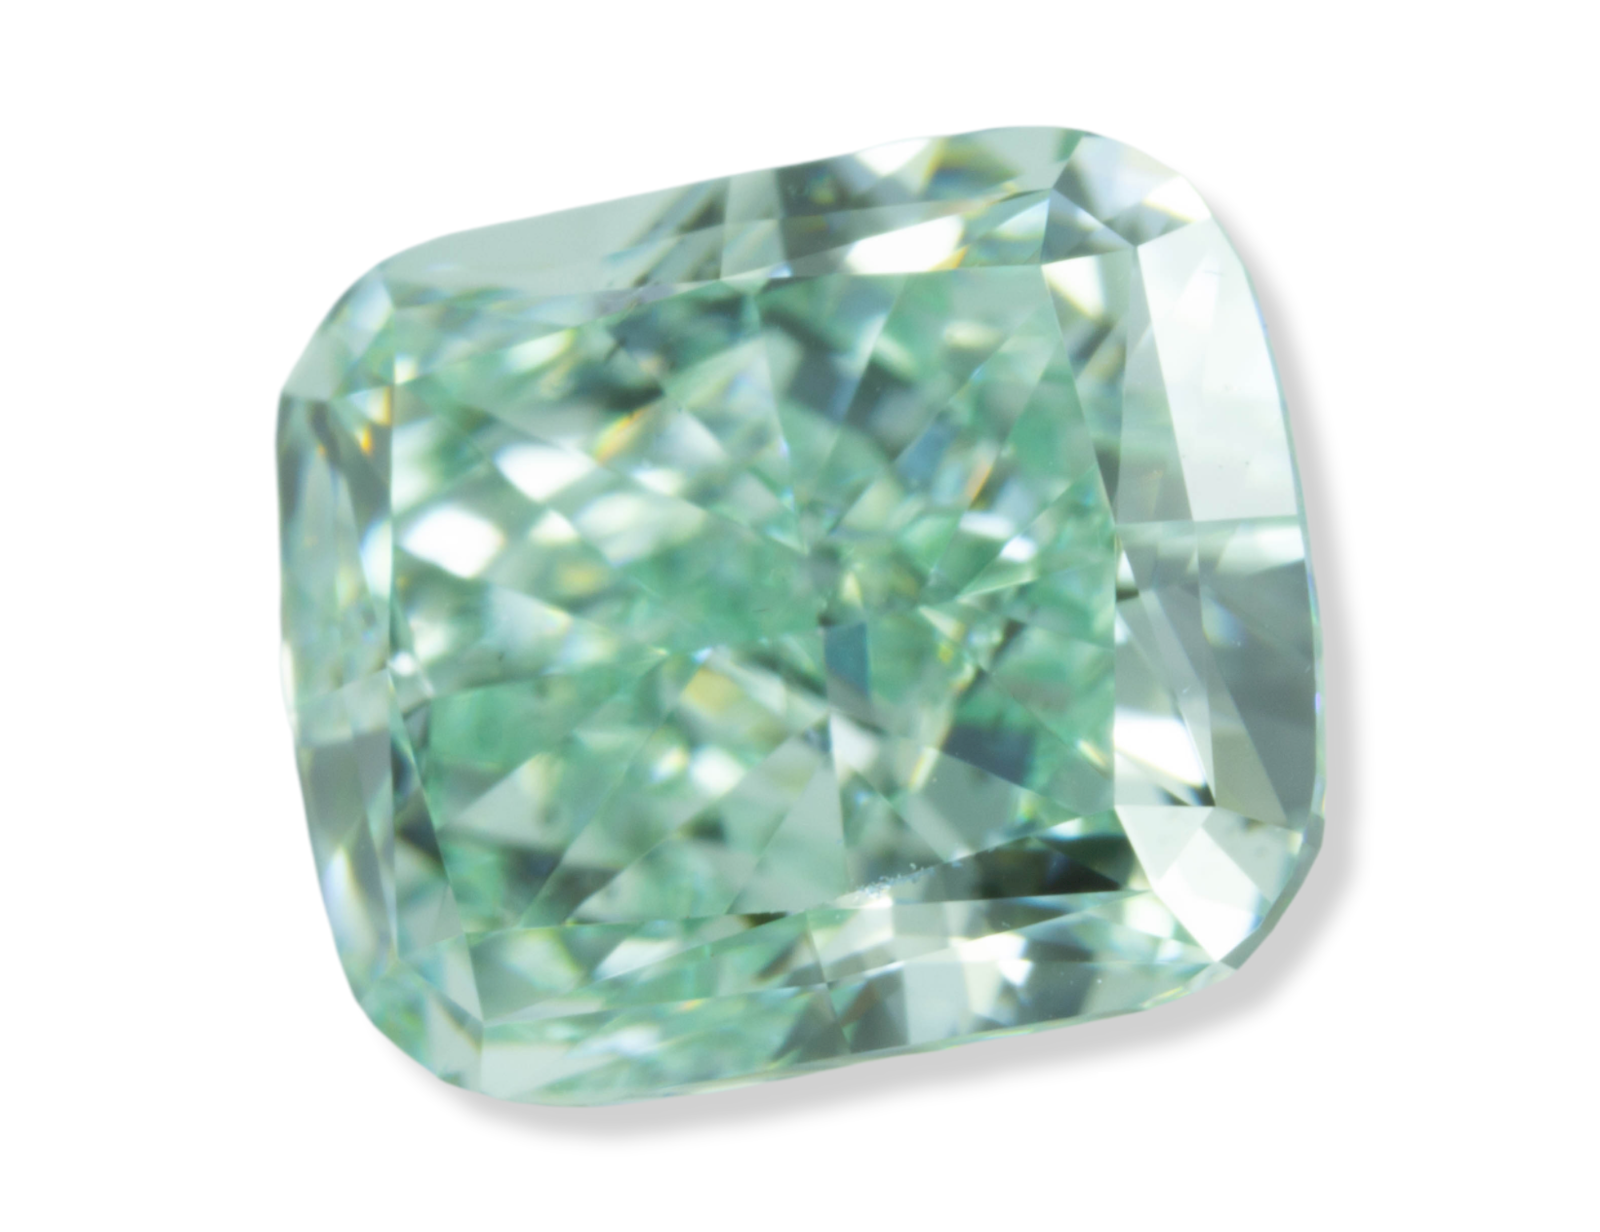 Loose Cushion Cut Diamond Fancy Green Color 1.02 Carat VS1 Natural Enhanced 